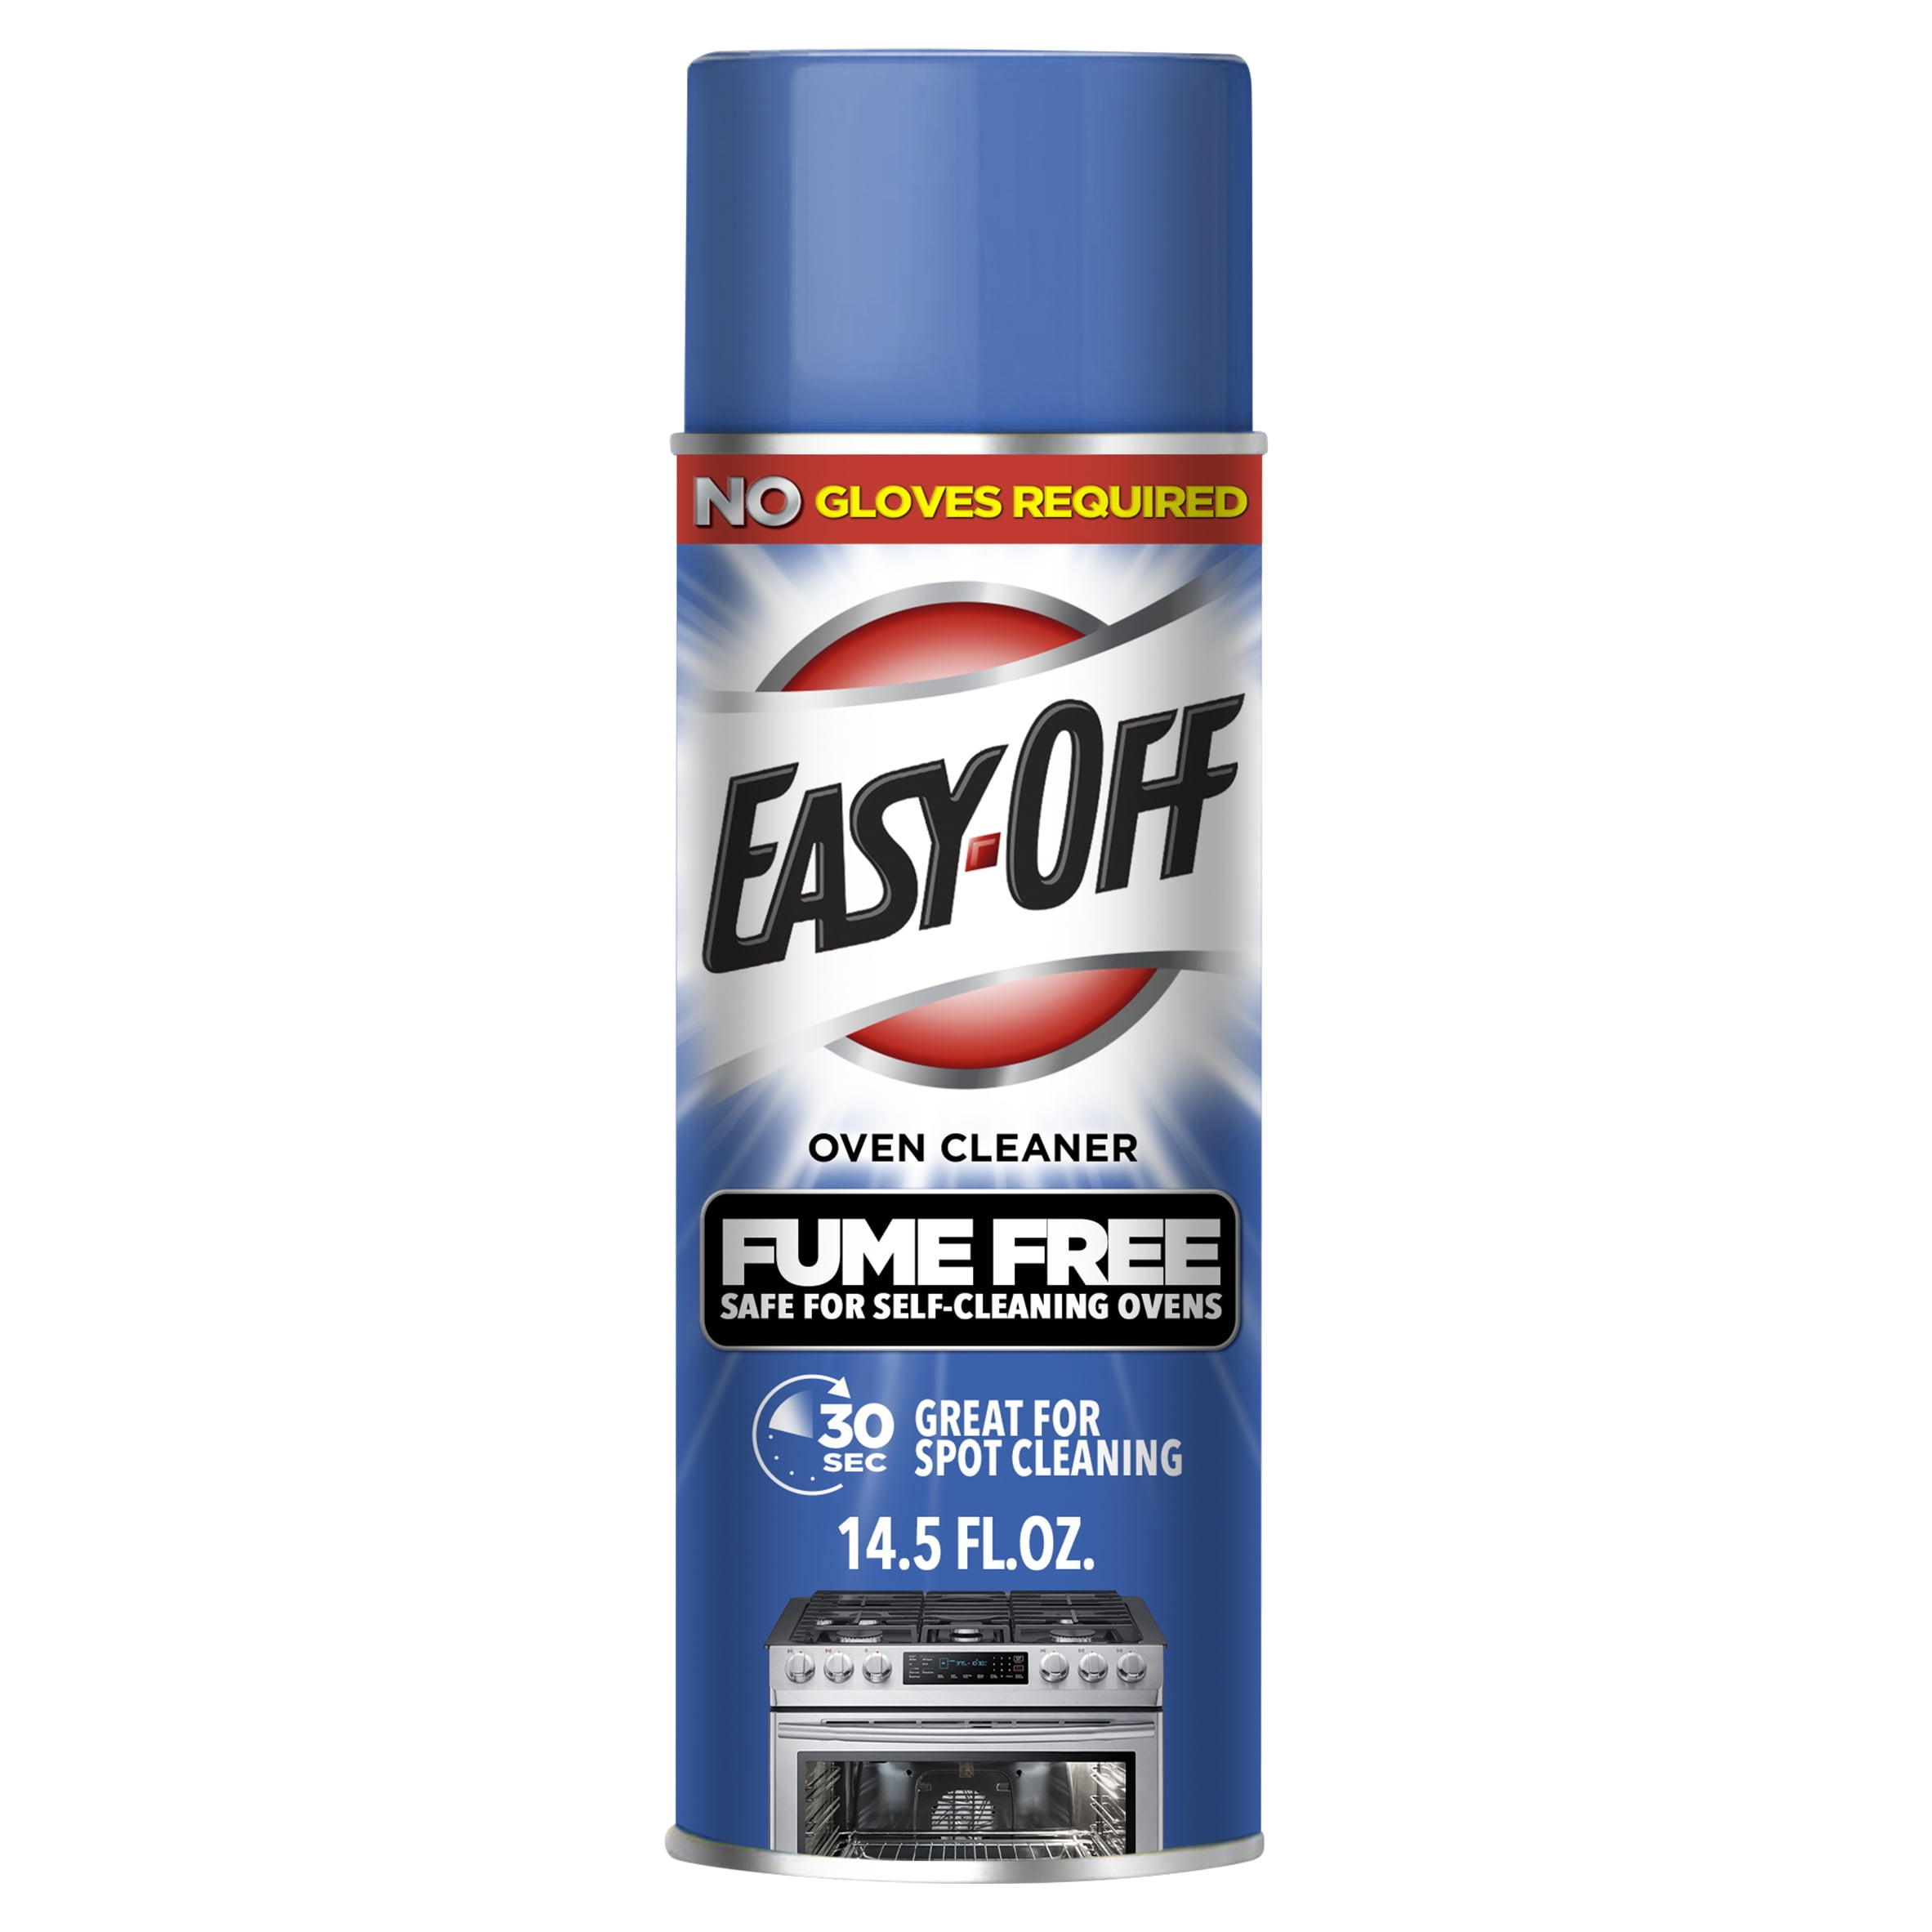 EASY-OFF Fume Free Oven Cleaner Spray, Lemon 14.5 oz, Removes Grease